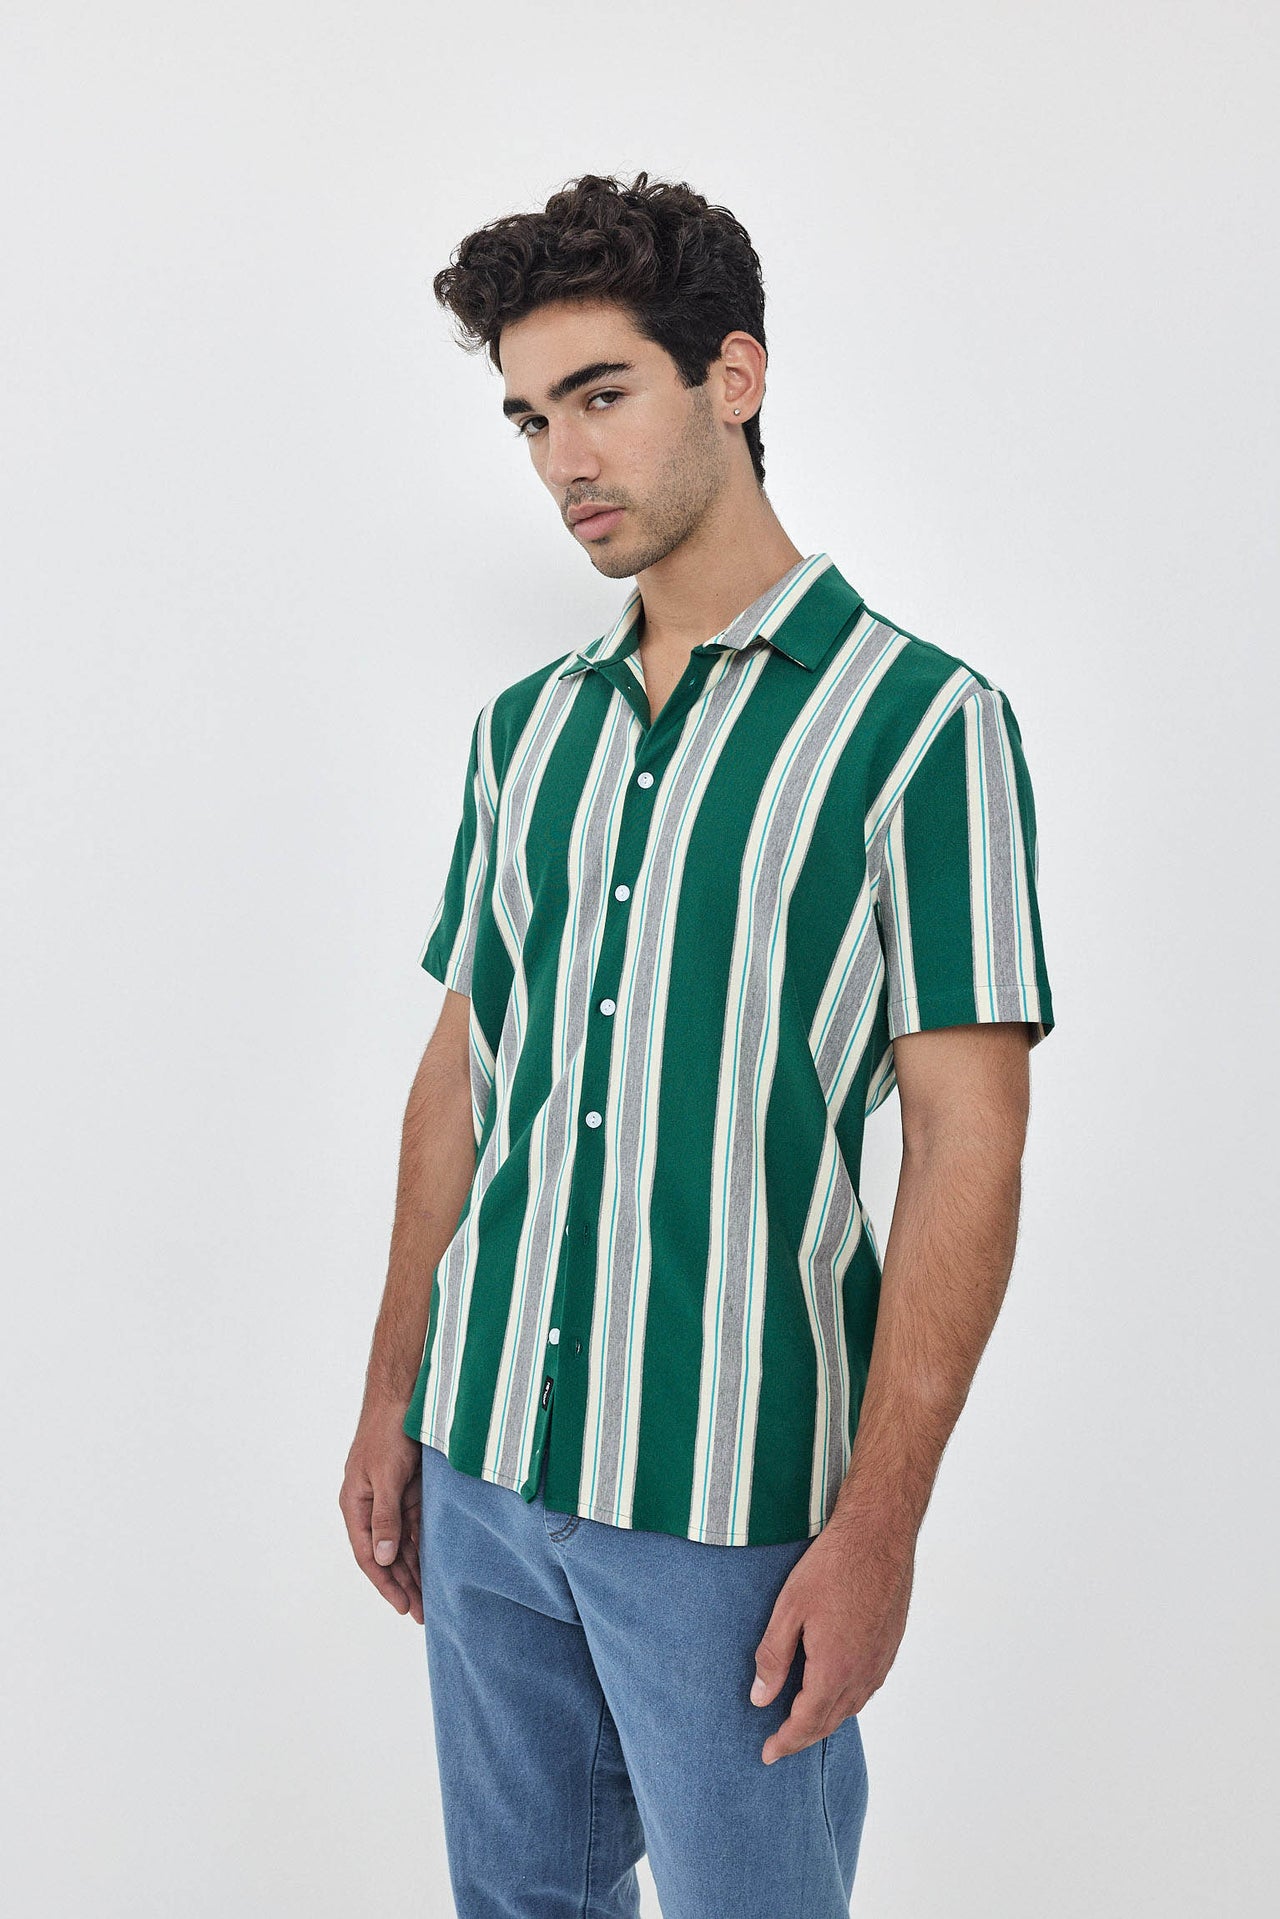 SHORT KAI Shirt S24 (XS-XL) - Green / Cream